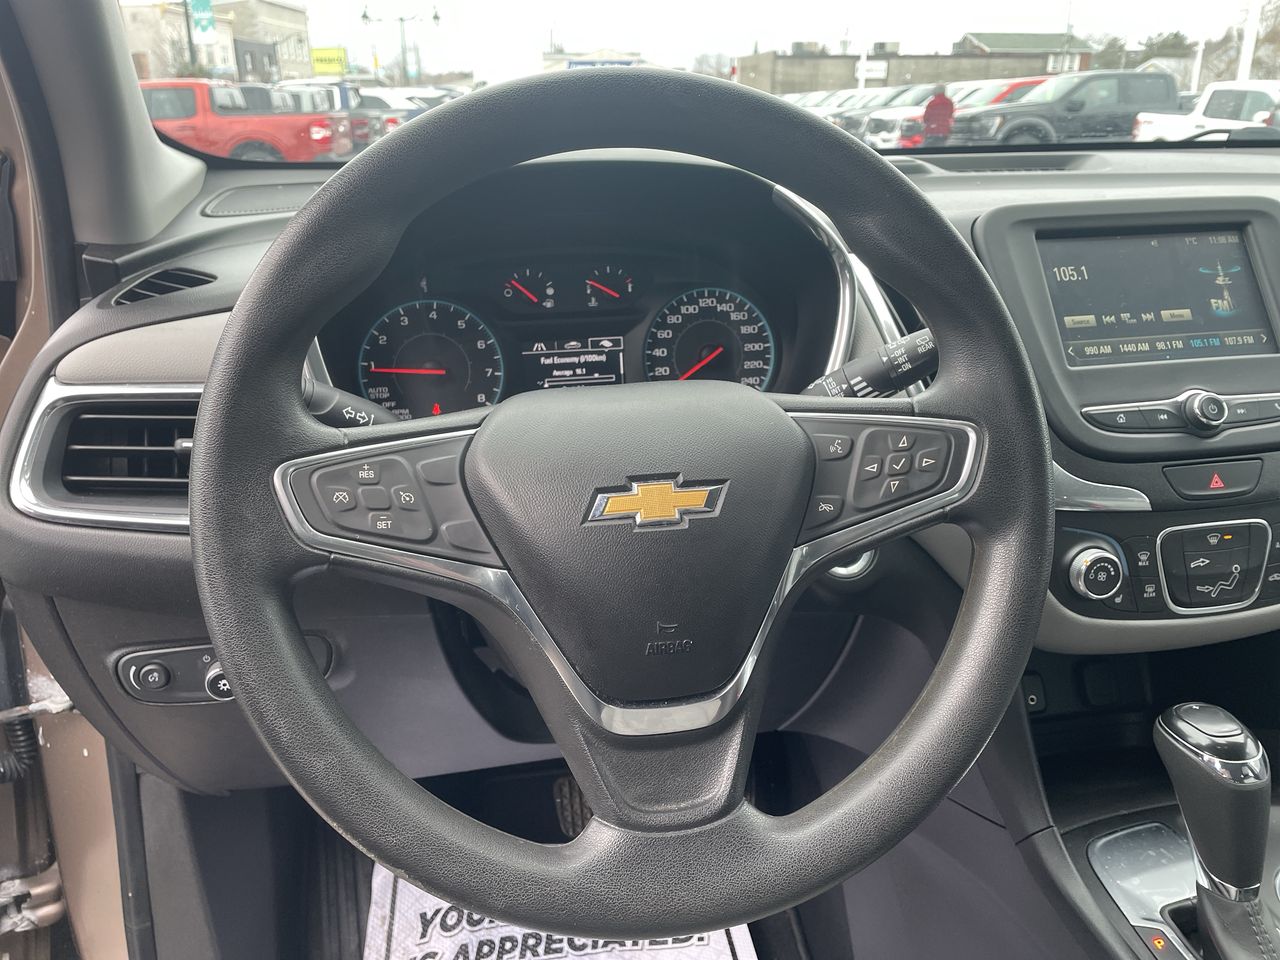 2018 Chevrolet Equinox - P21032 Full Image 14